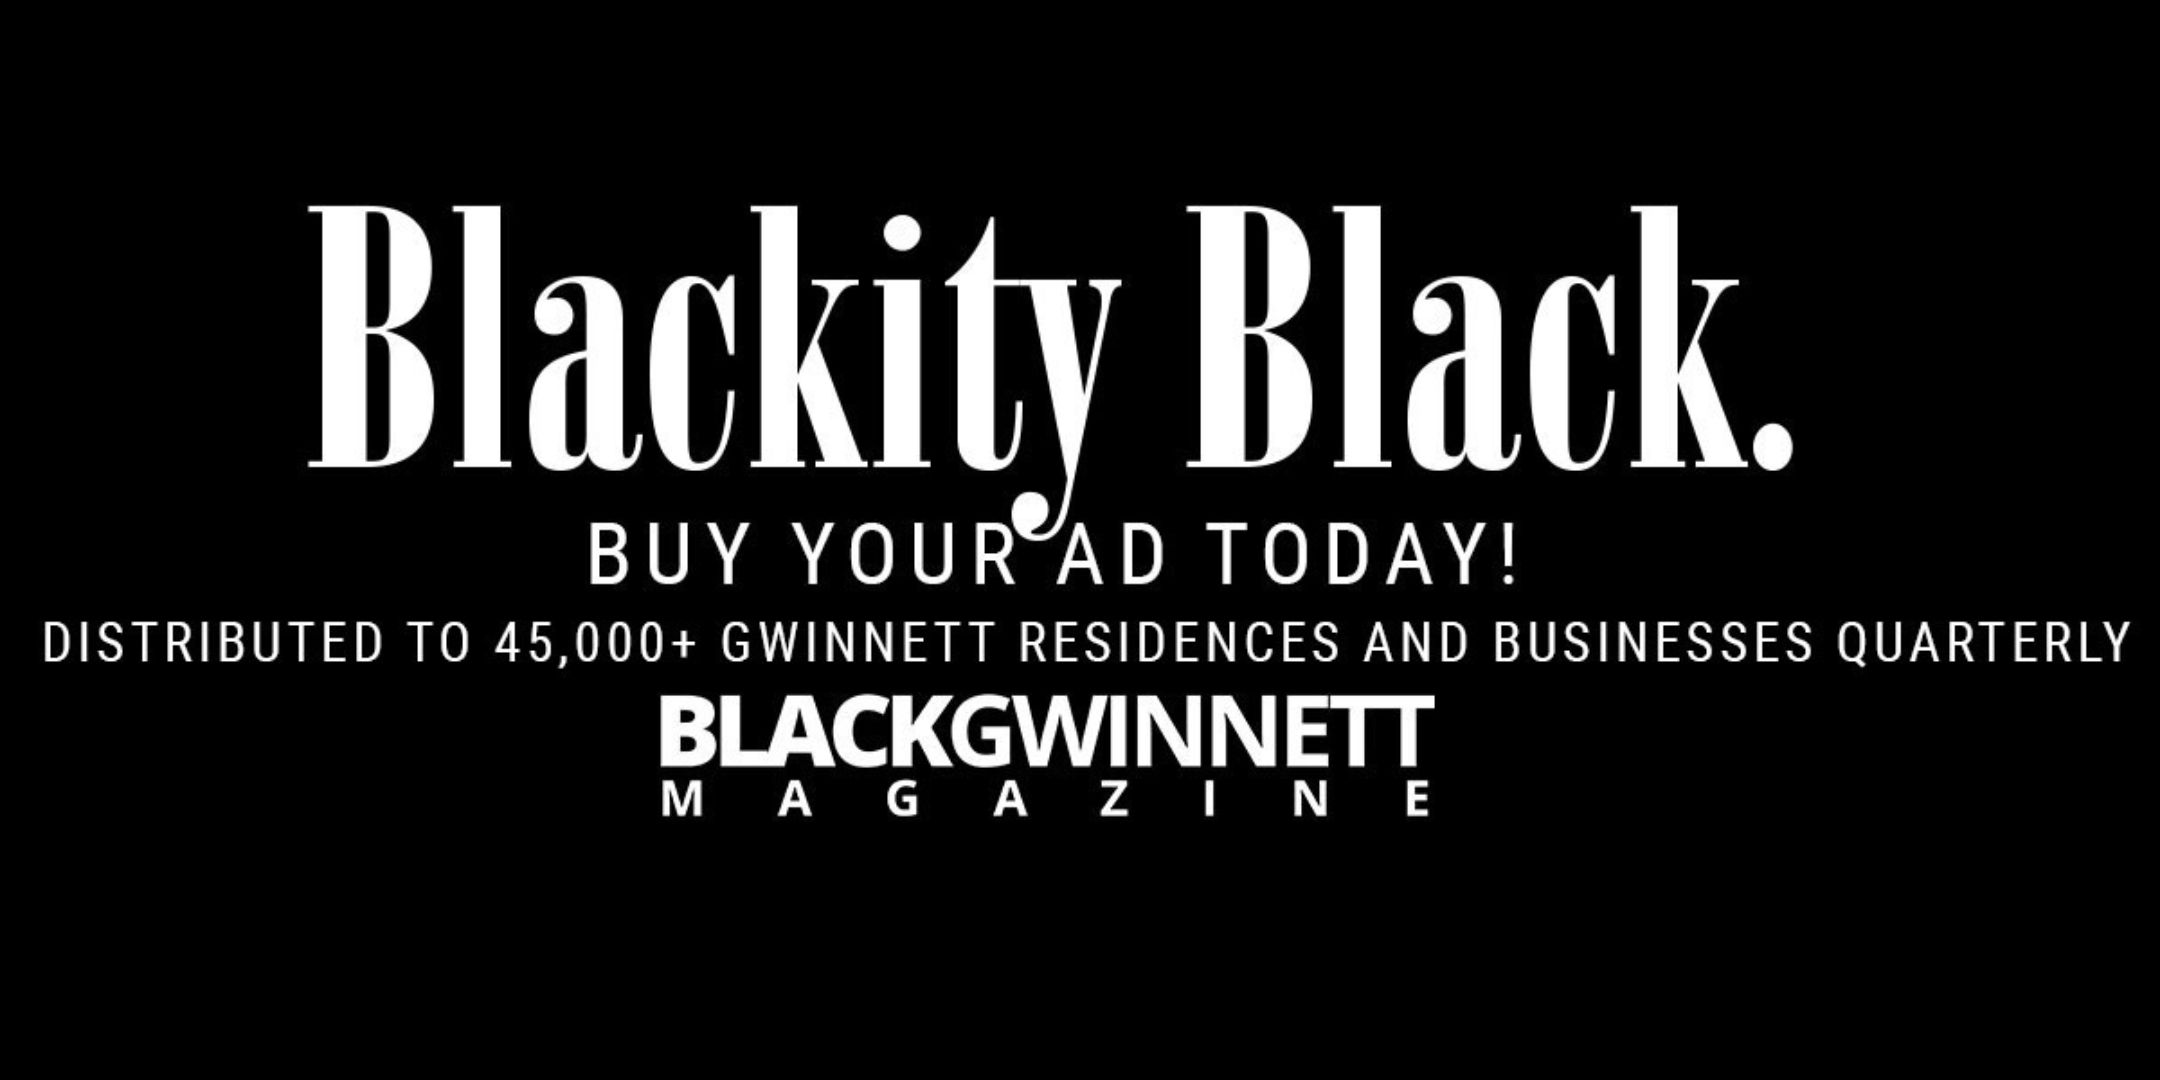 blackity black